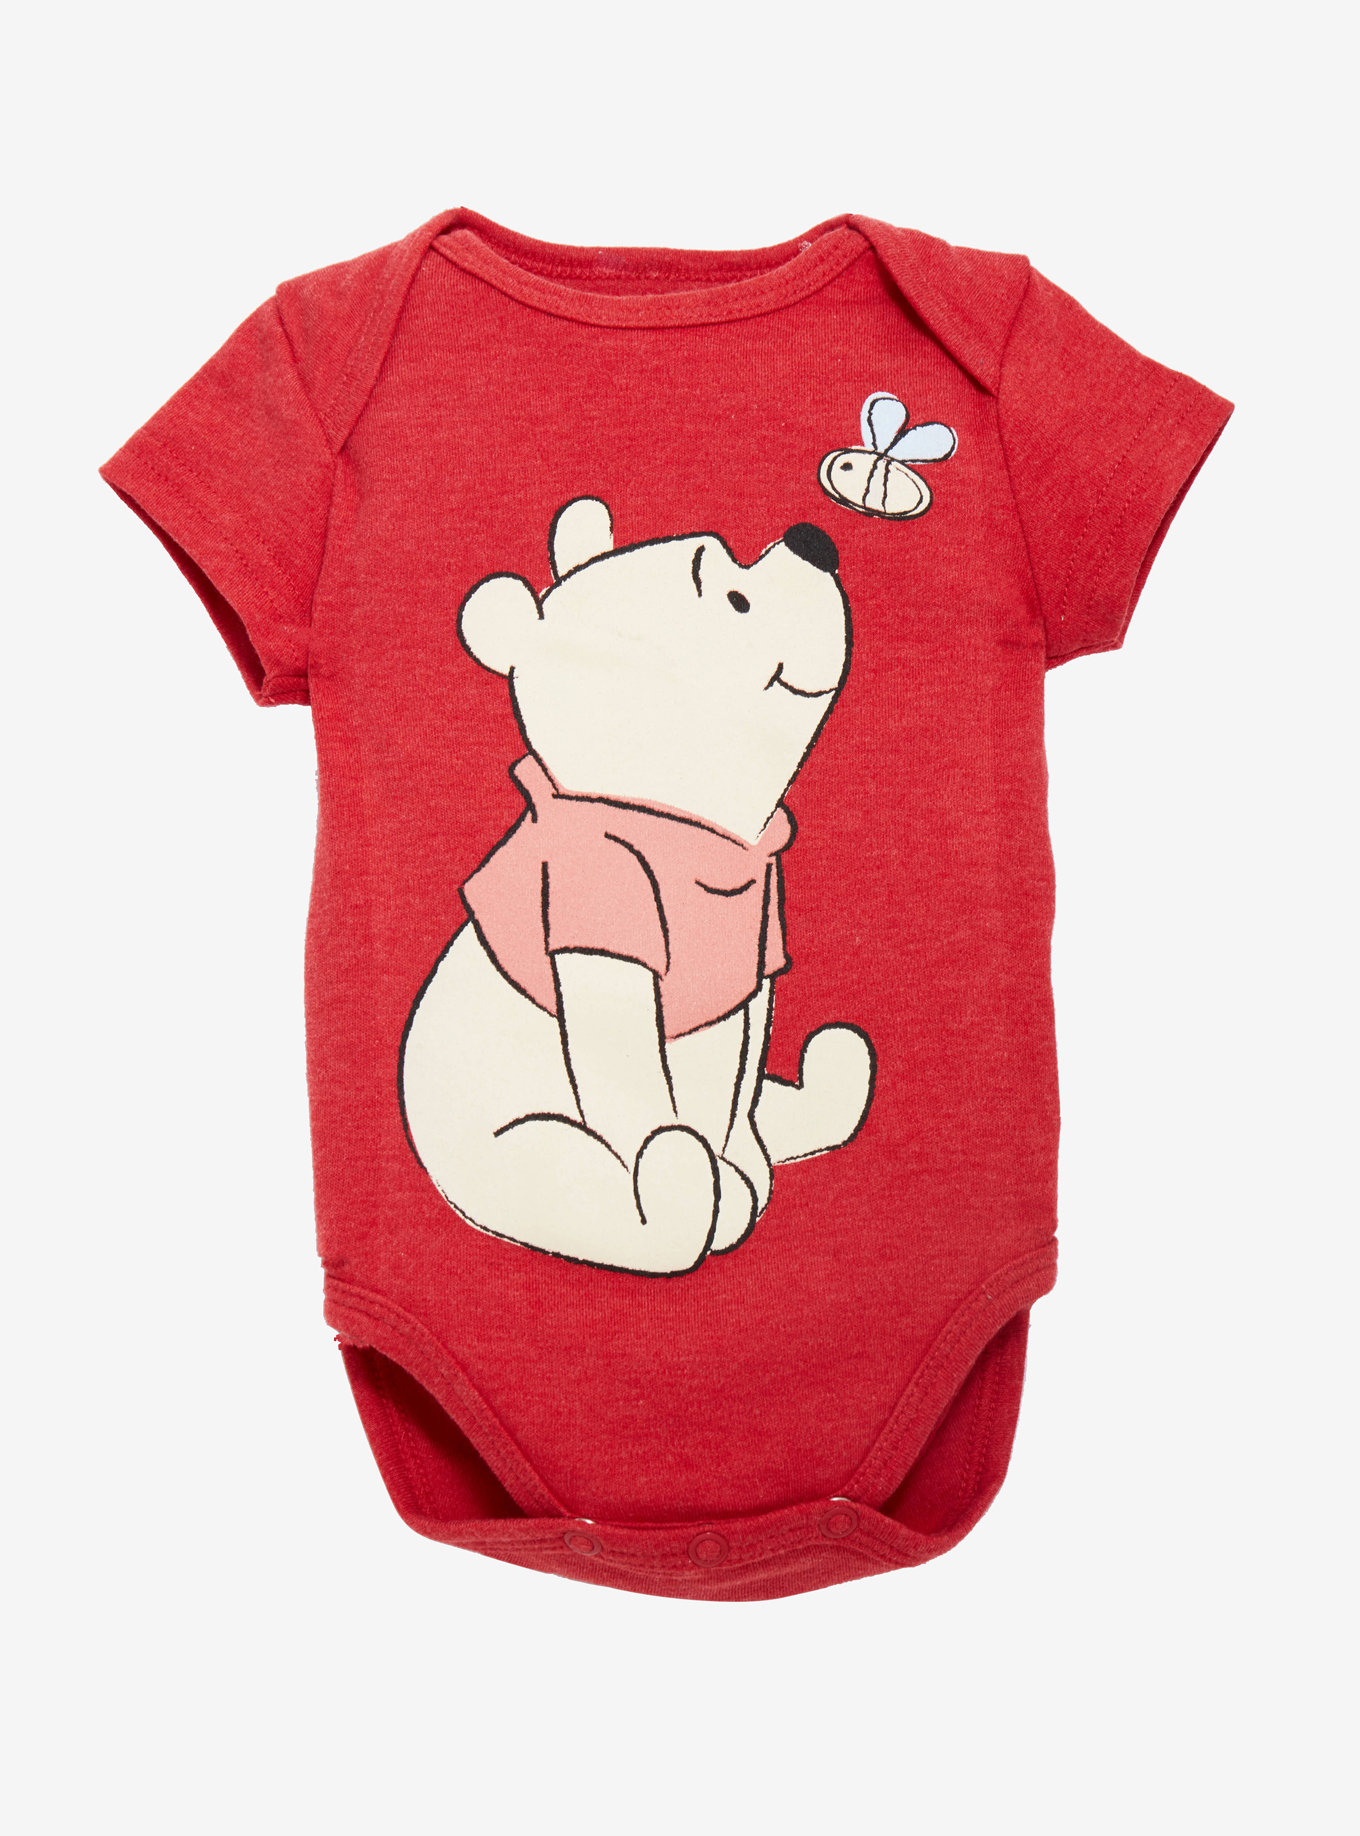 Пятачок одежда. Winnie the Pooh одежда. Disney Baby одежда. Бейби мило одежда. Комбинезон Disney Baby красный.